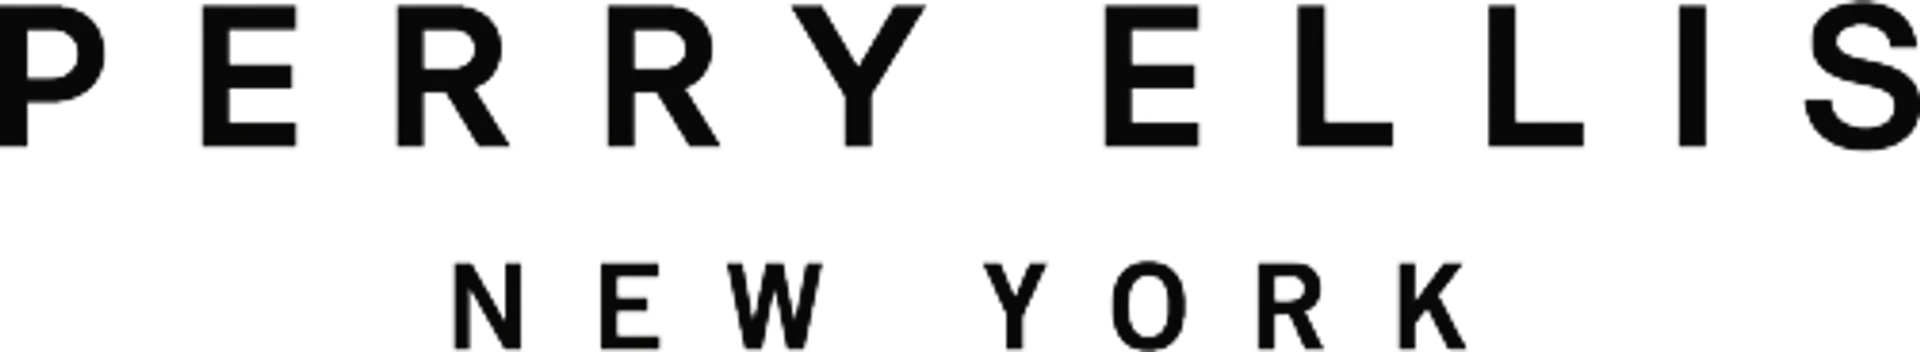 PERRY ELLIS logo